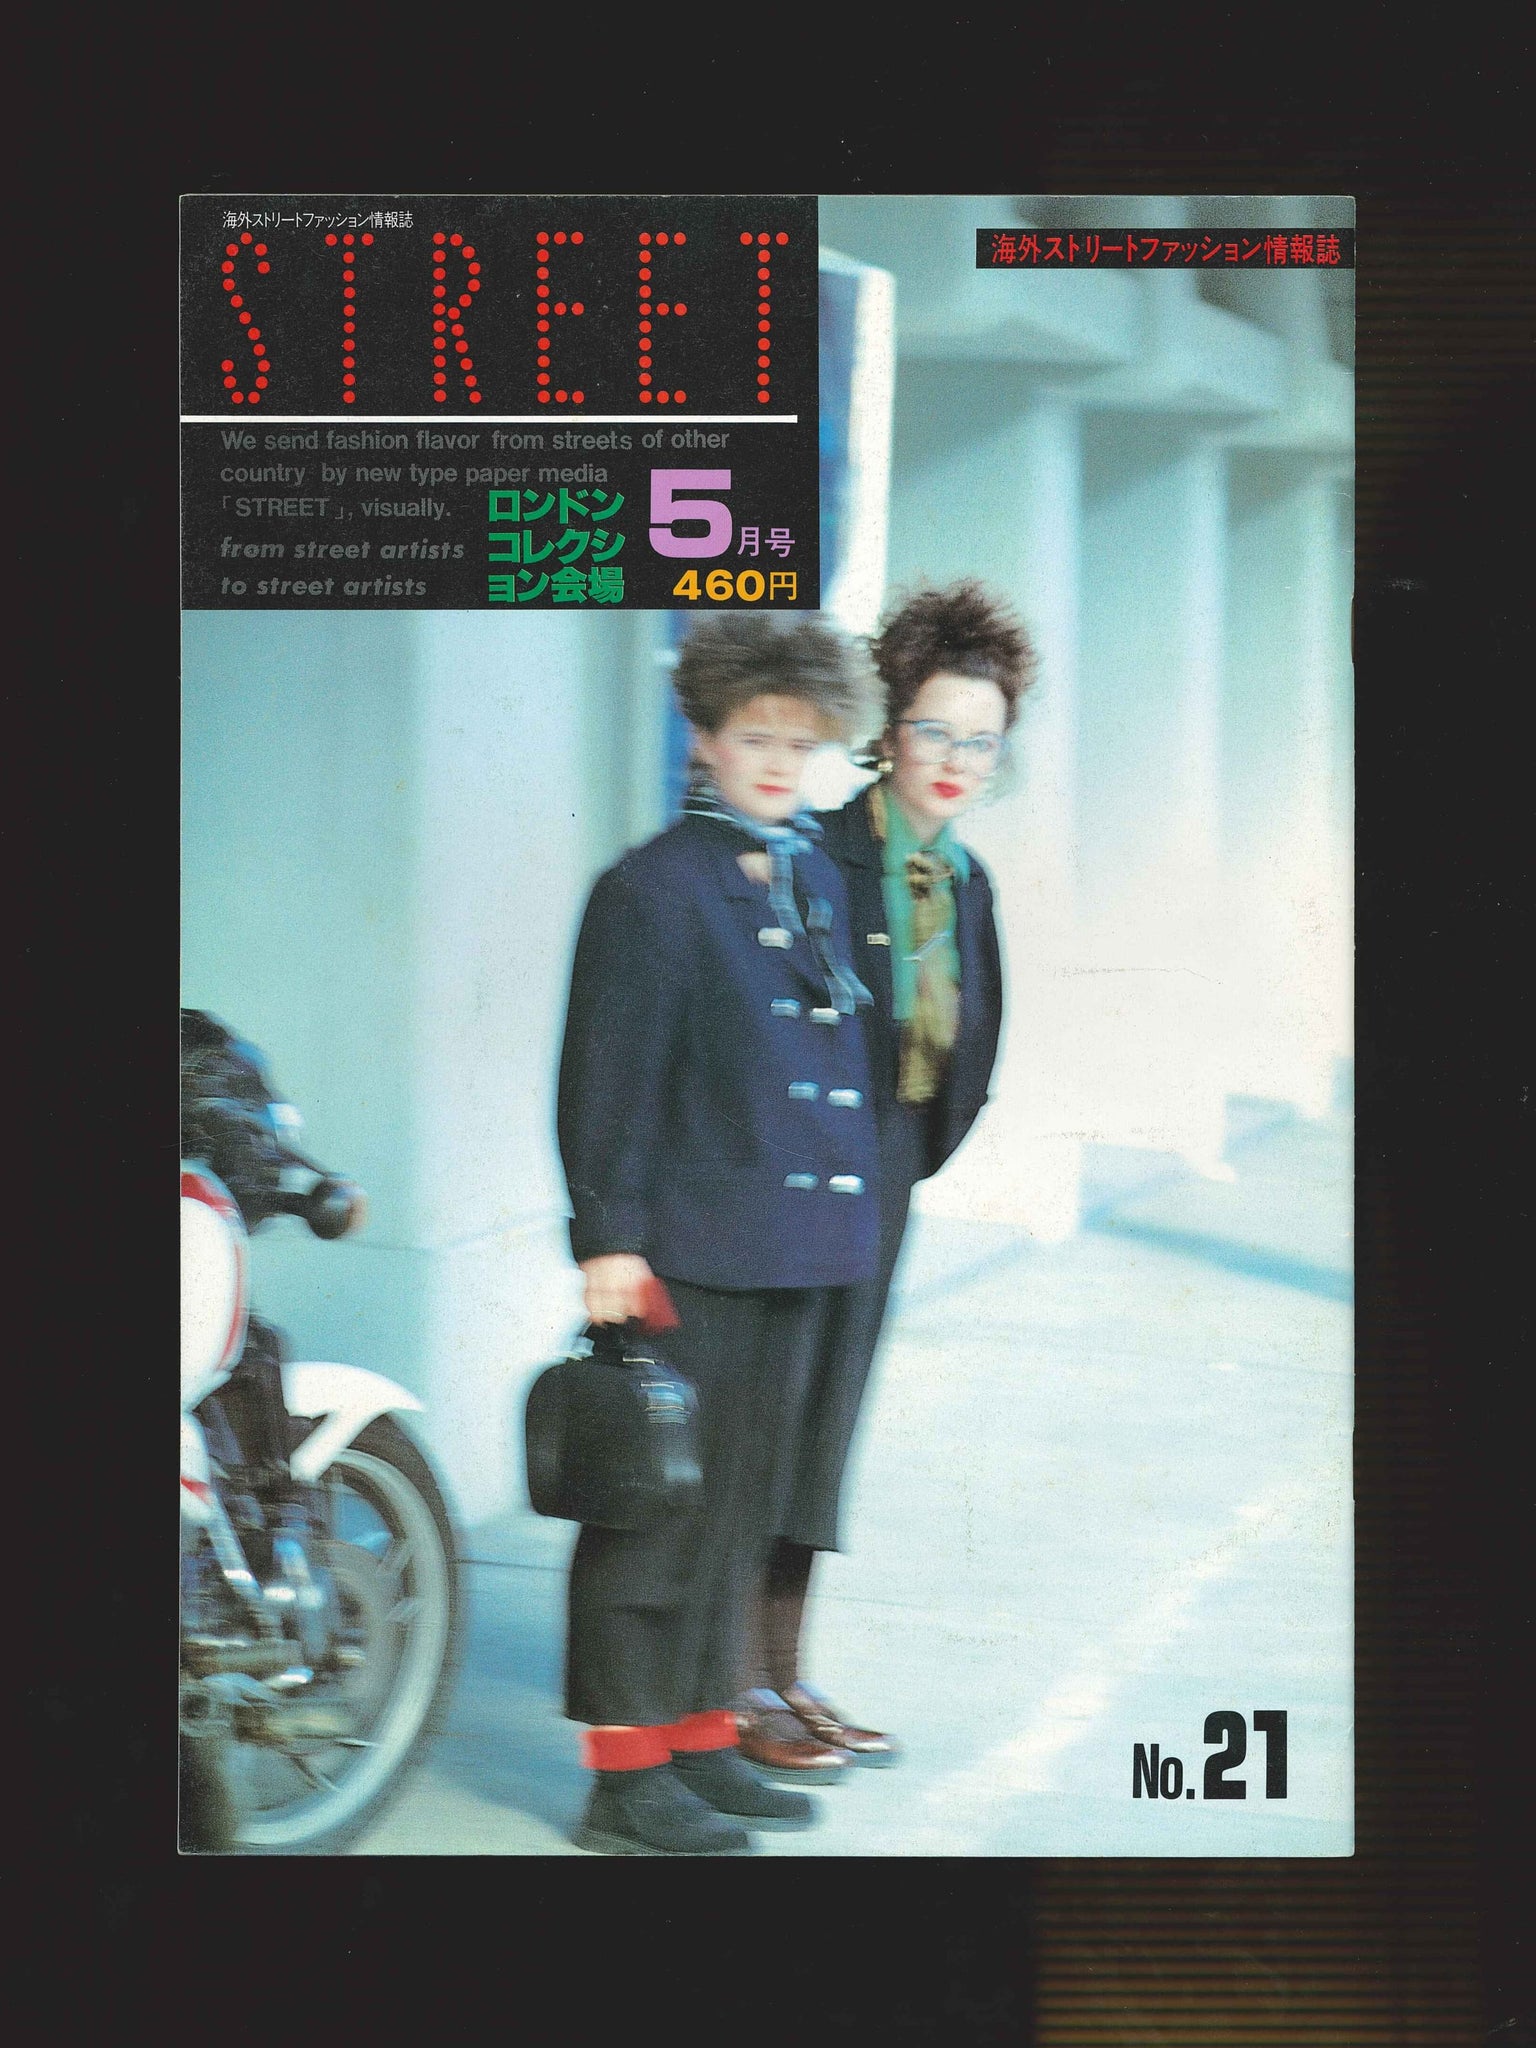 STREET magazine no. 21 / may 1989 / london collections / Shoichi Aoki